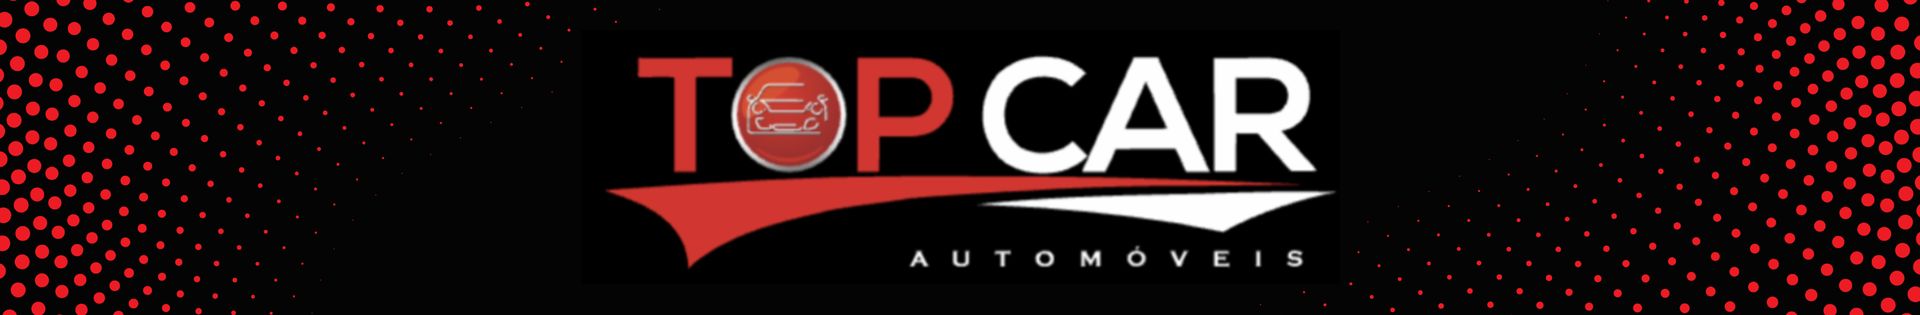 TOPCAR Automoveis top banner